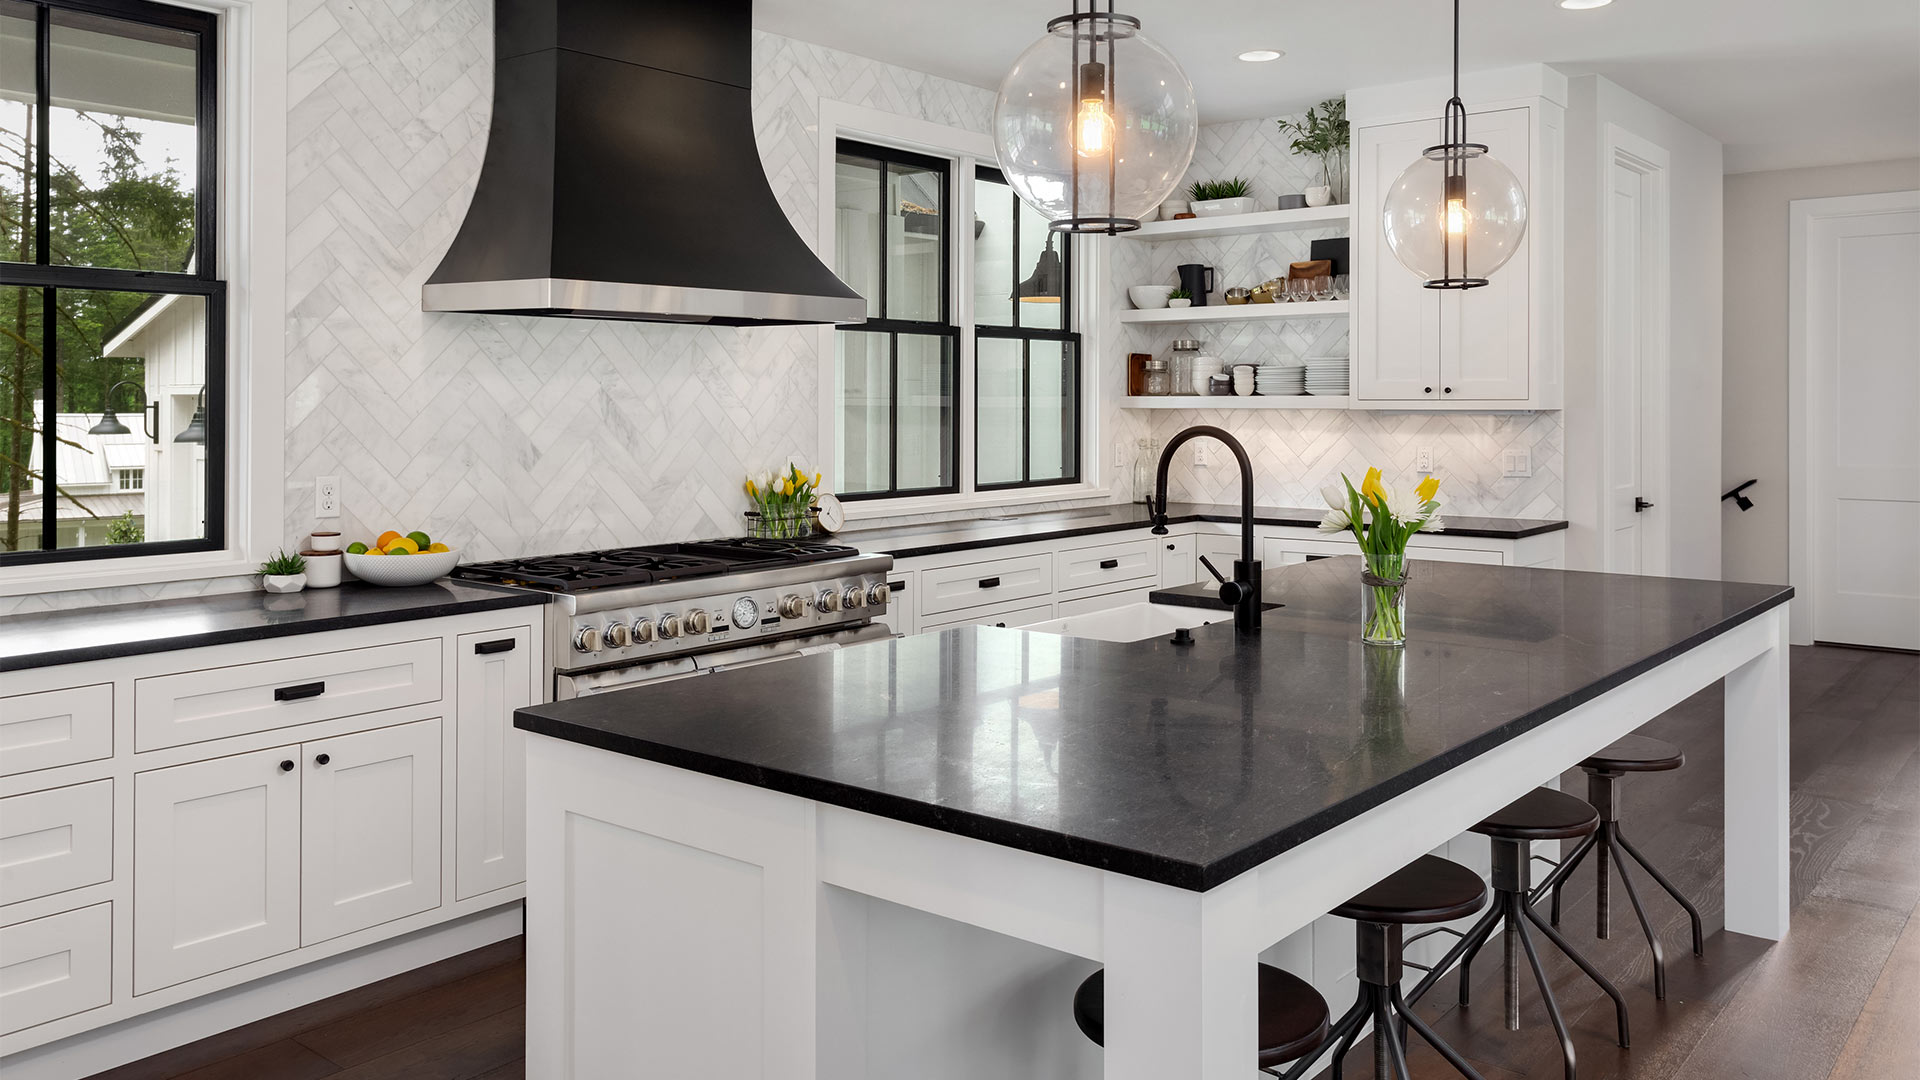 kitchen interiors with white cabinets and backsplash and black fixtures everett wa